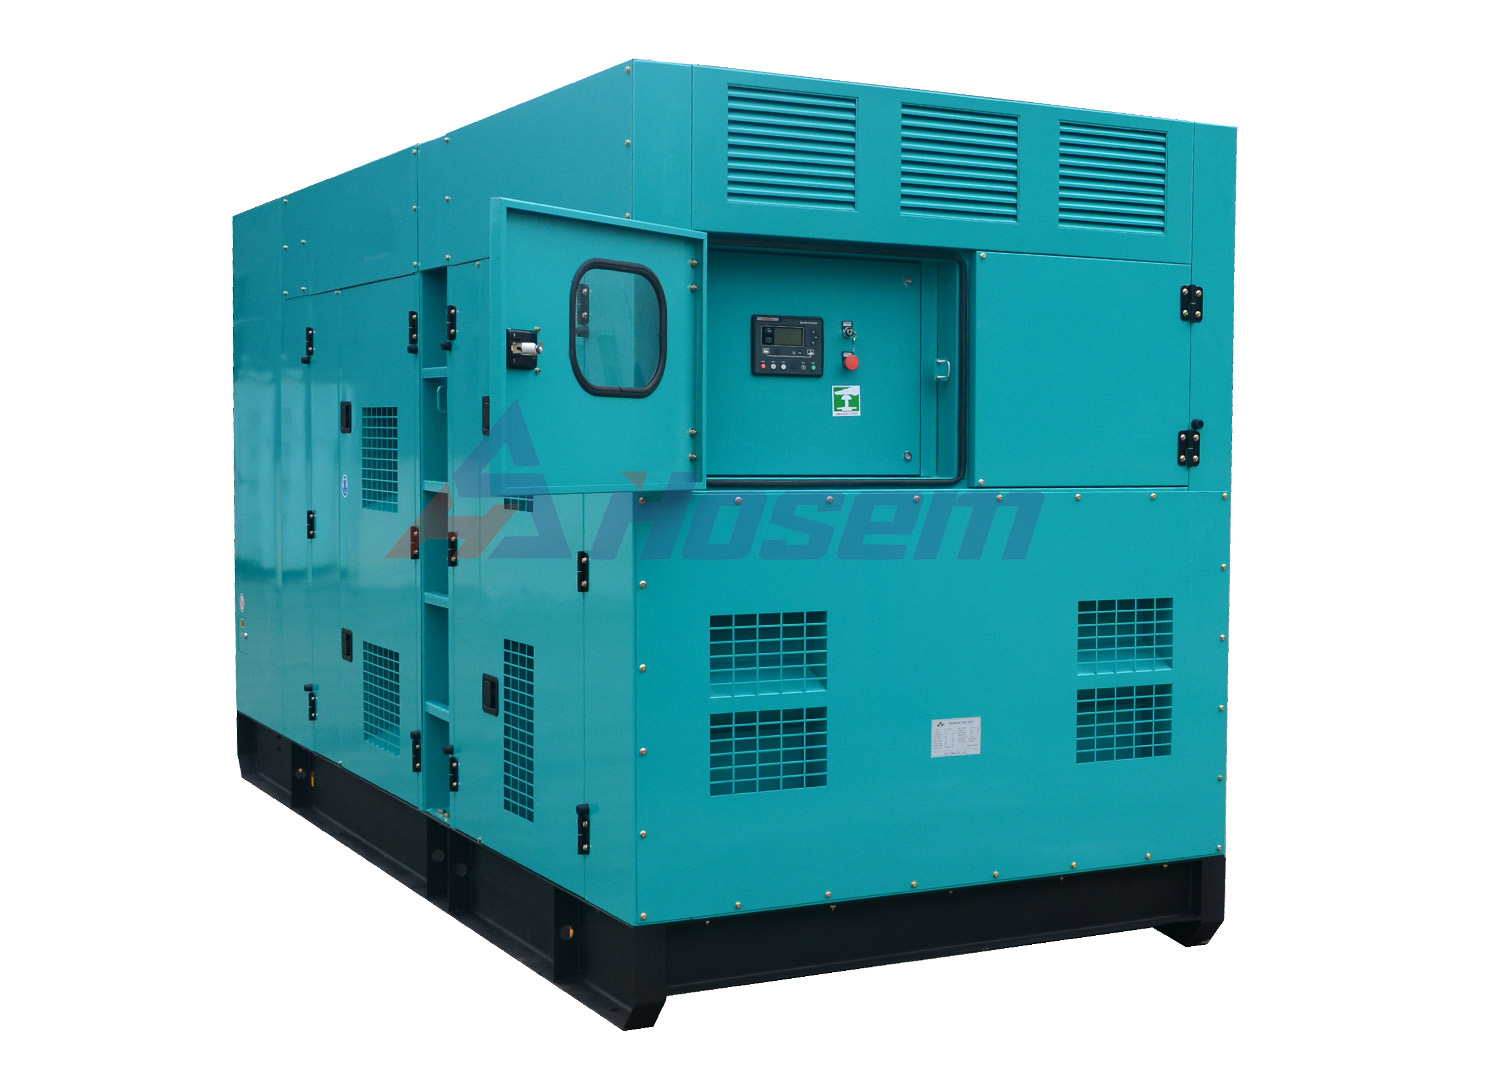 550kW Doosan Diesel Generator Set Drived by Doosan Engine DP222LB for Industrial